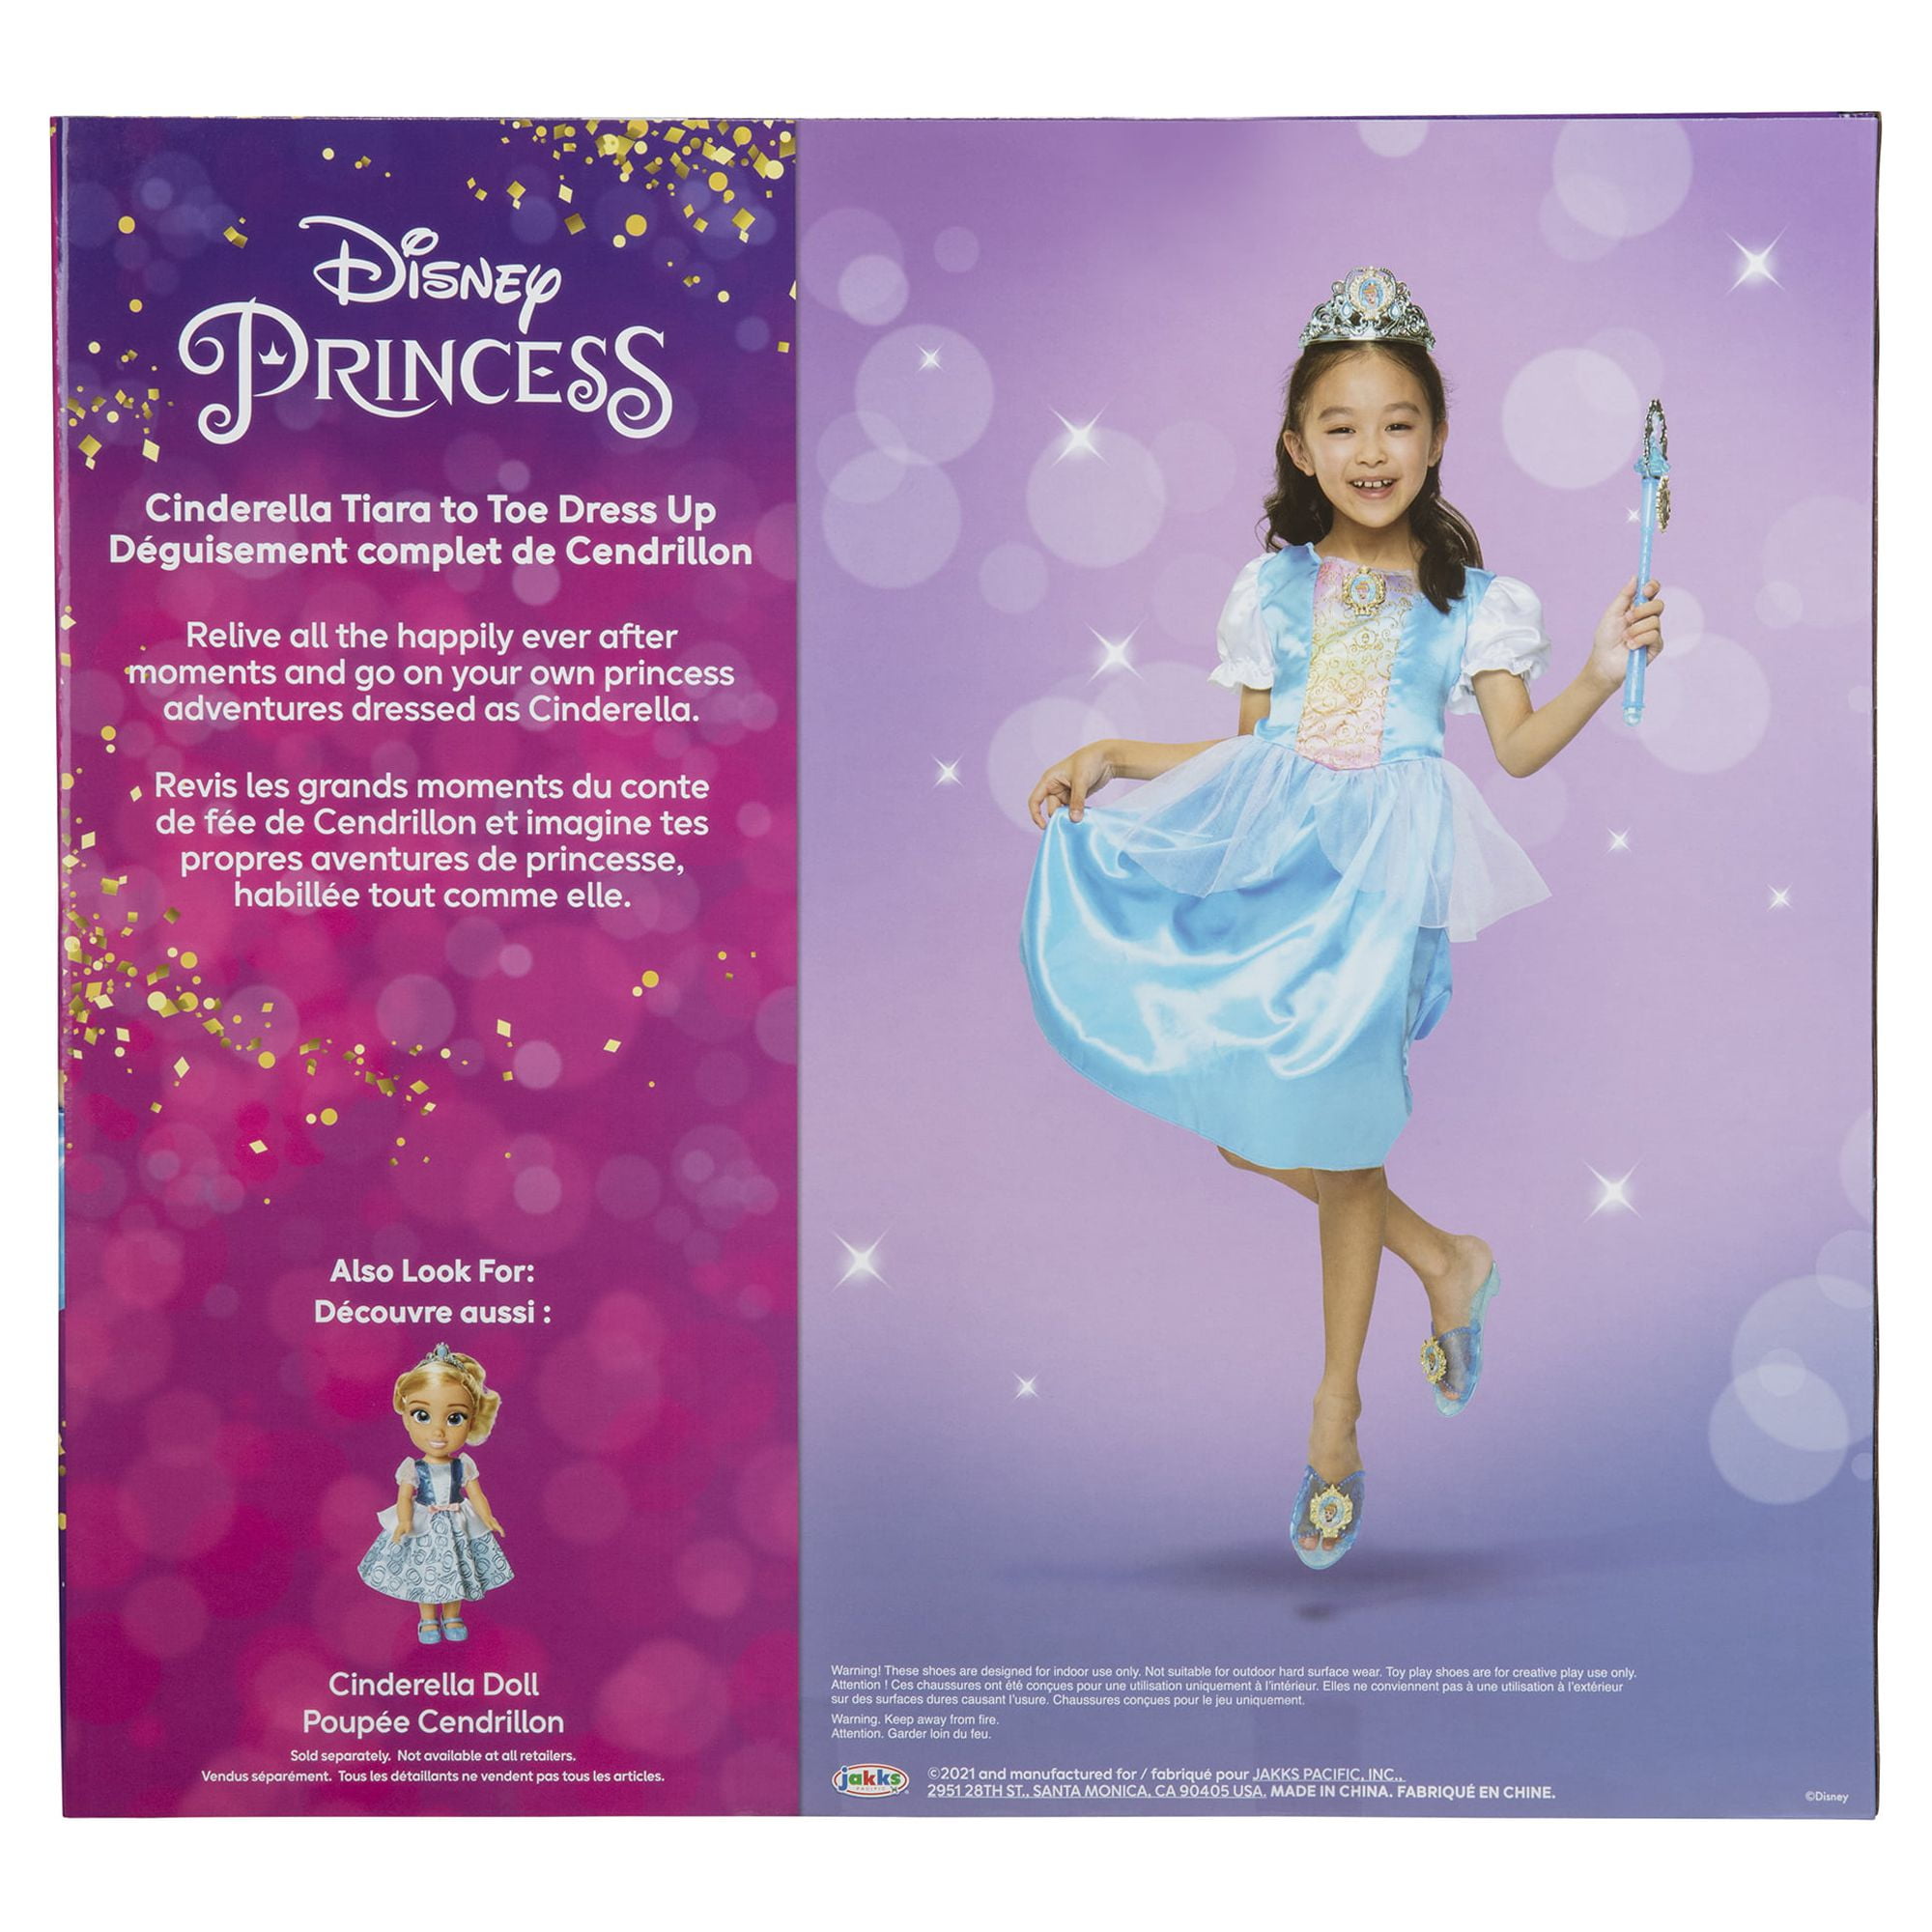 Disney princesses - deguisement chaussures